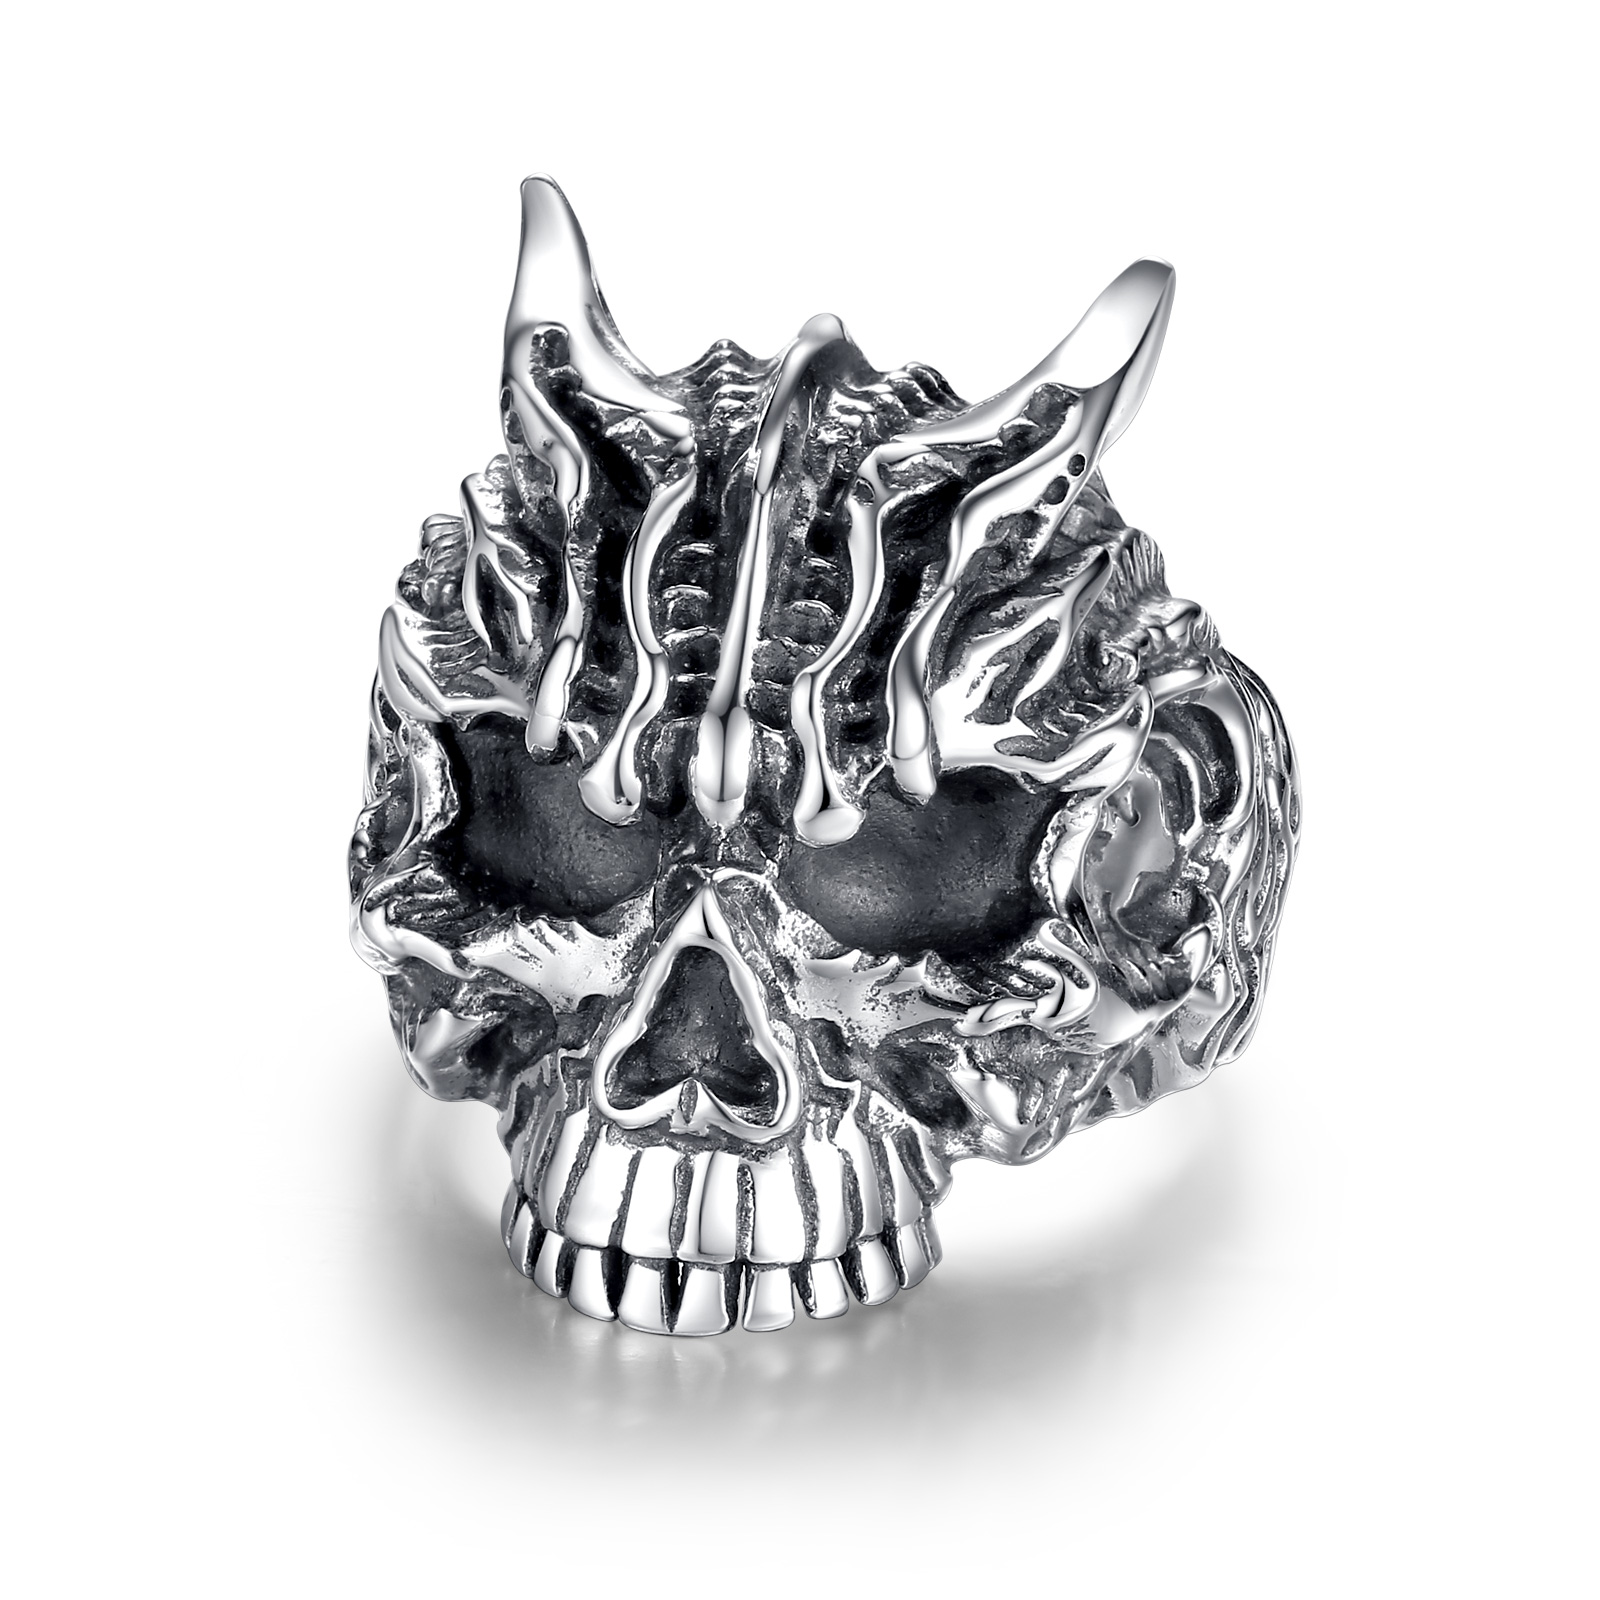 Merryshine Jewelry Open Adjustable Size 925 Sterling Silver Punk Vintage Lucifer Skull Ring for Men